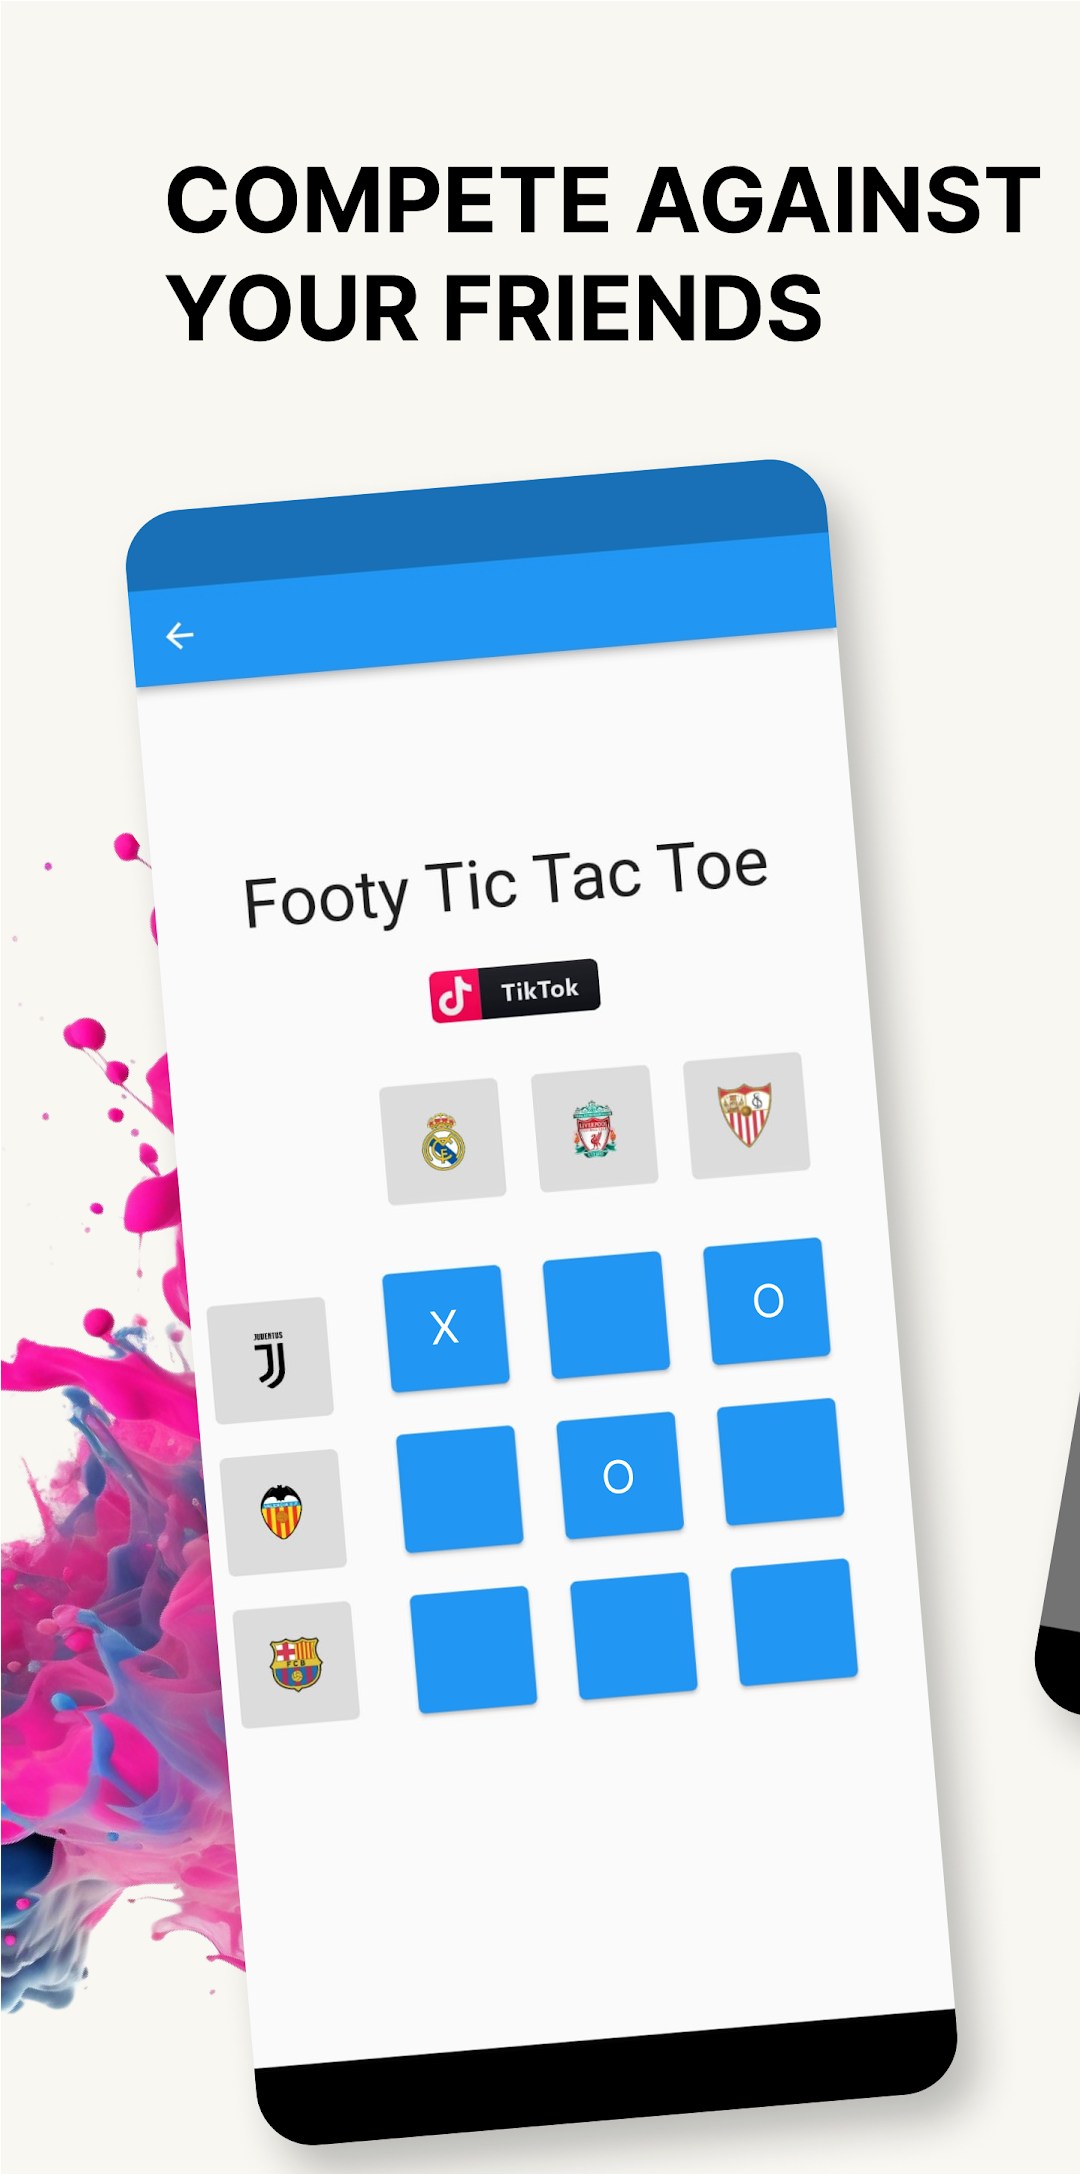 Footy Tic Tac Toe #footy #football #soccer #footytiktok #footytictacto